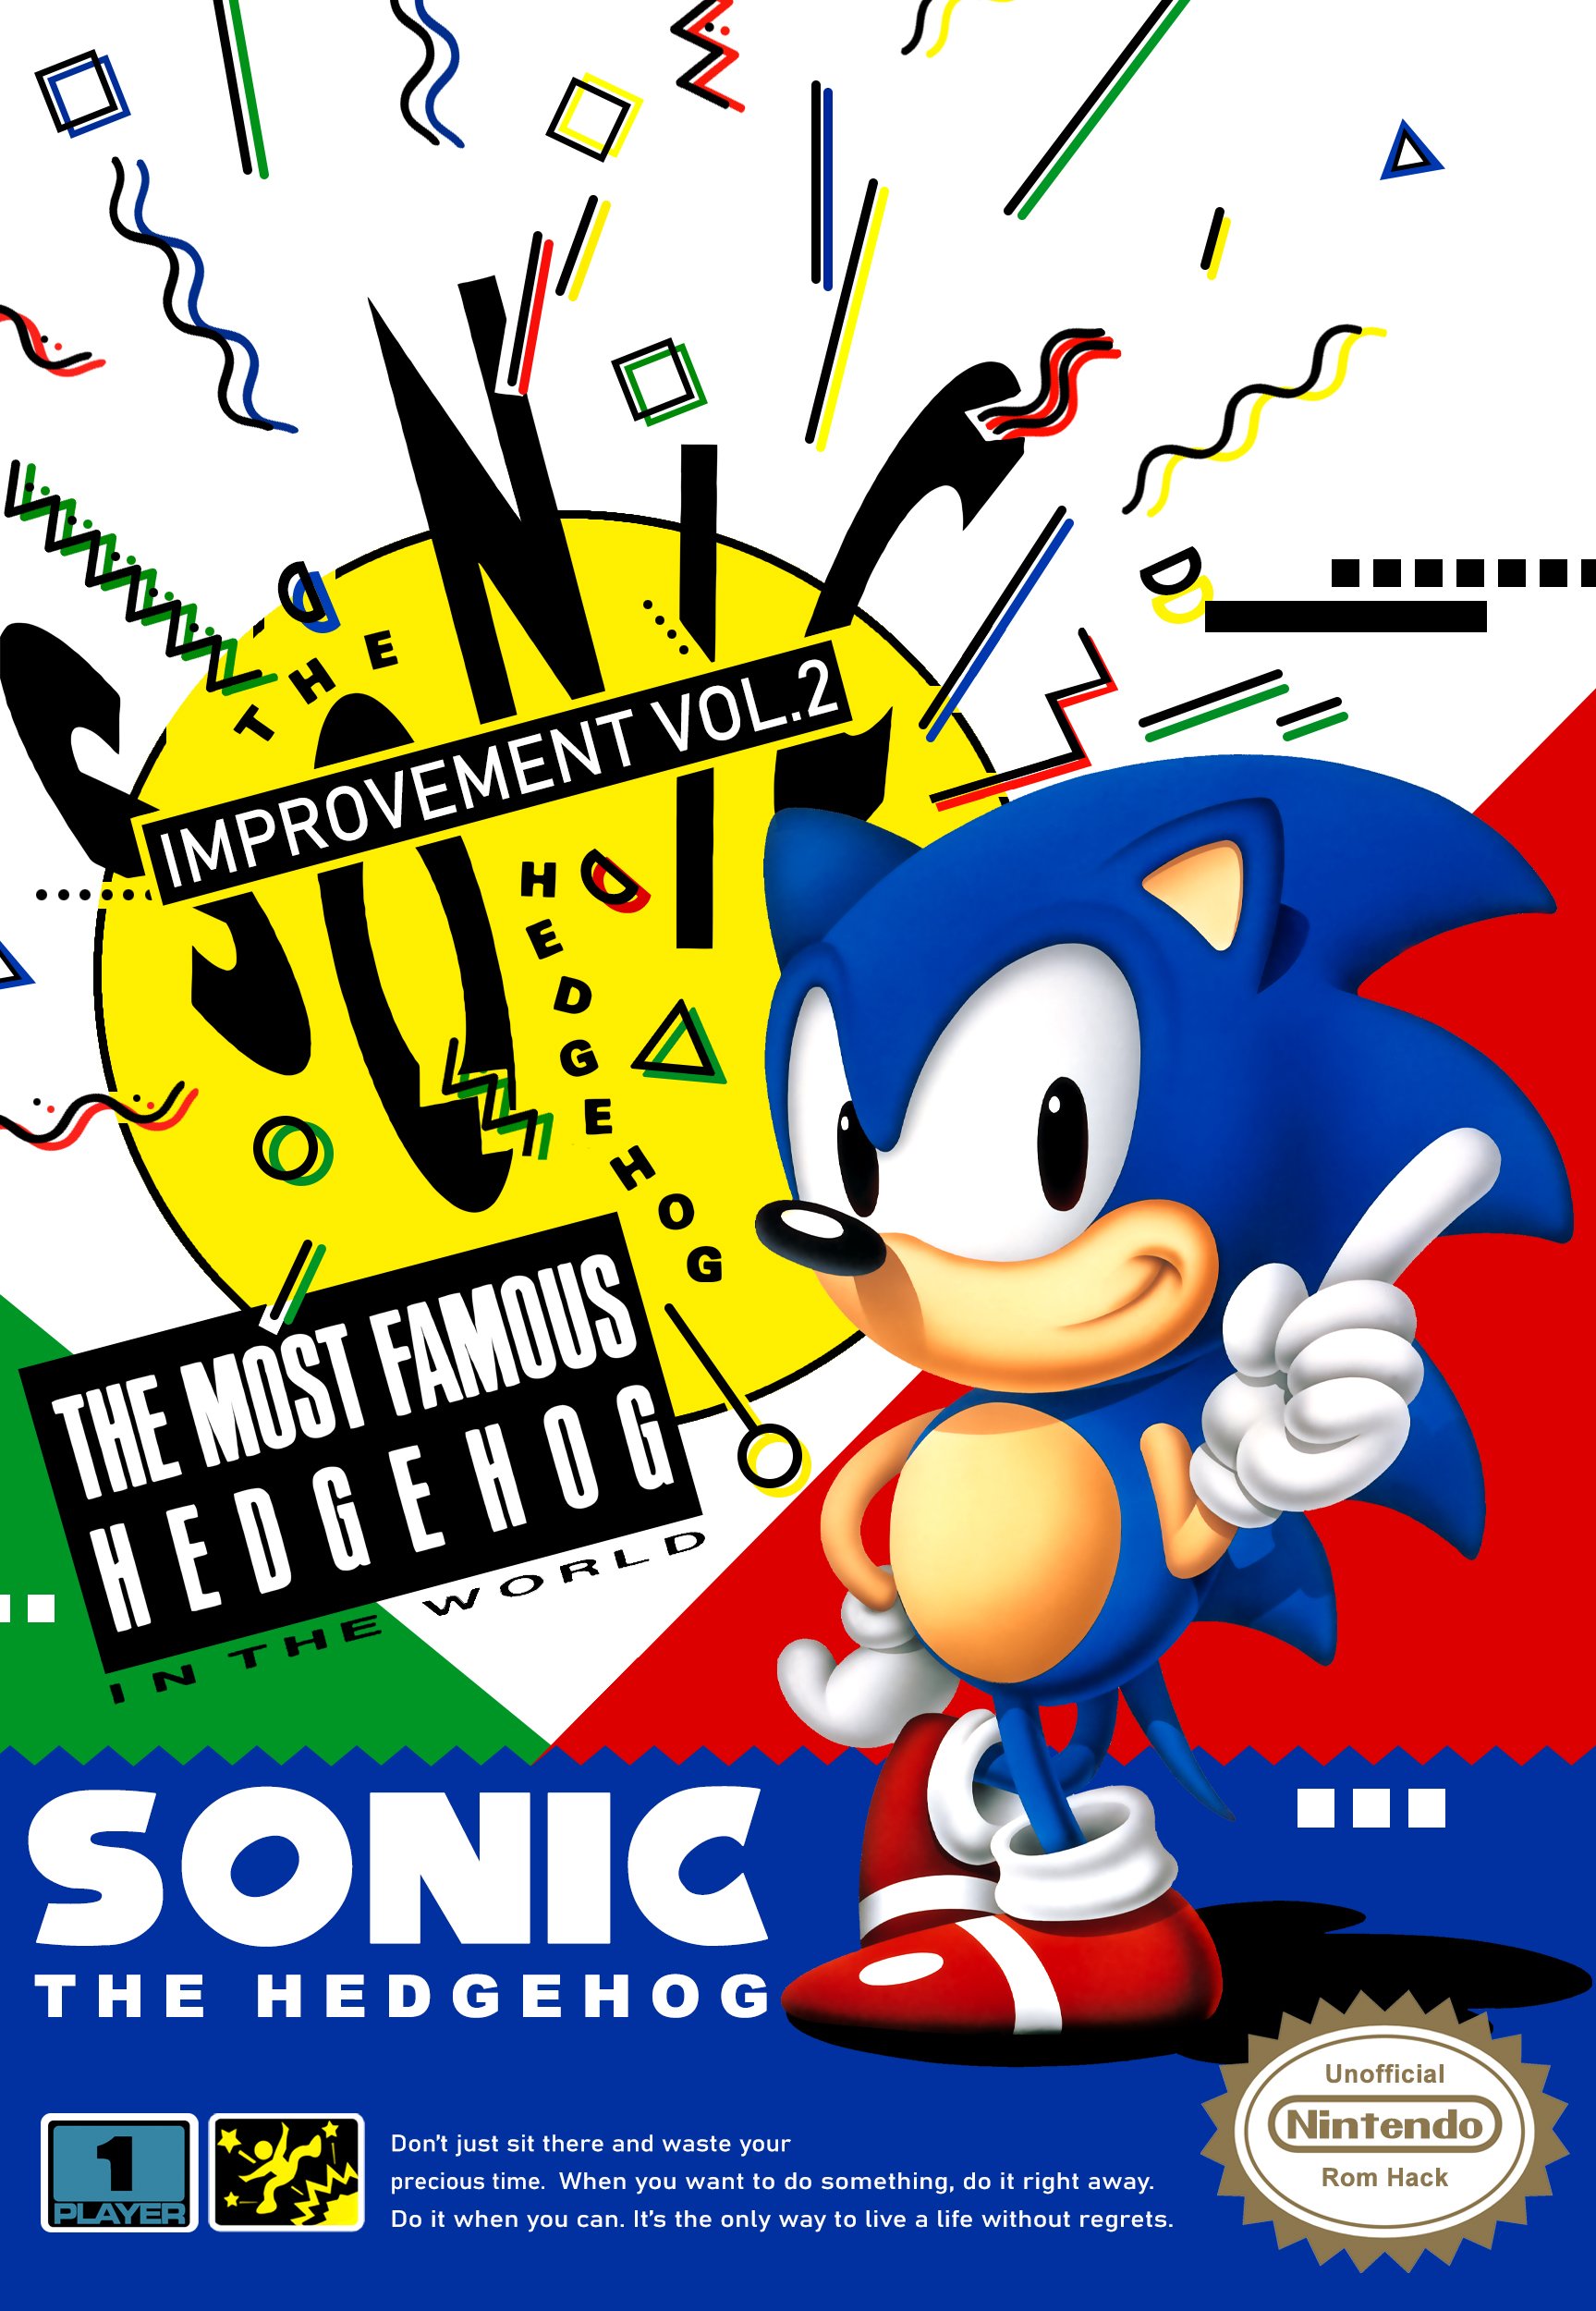 Sonic the Hedgehog: Improvement Vol.2